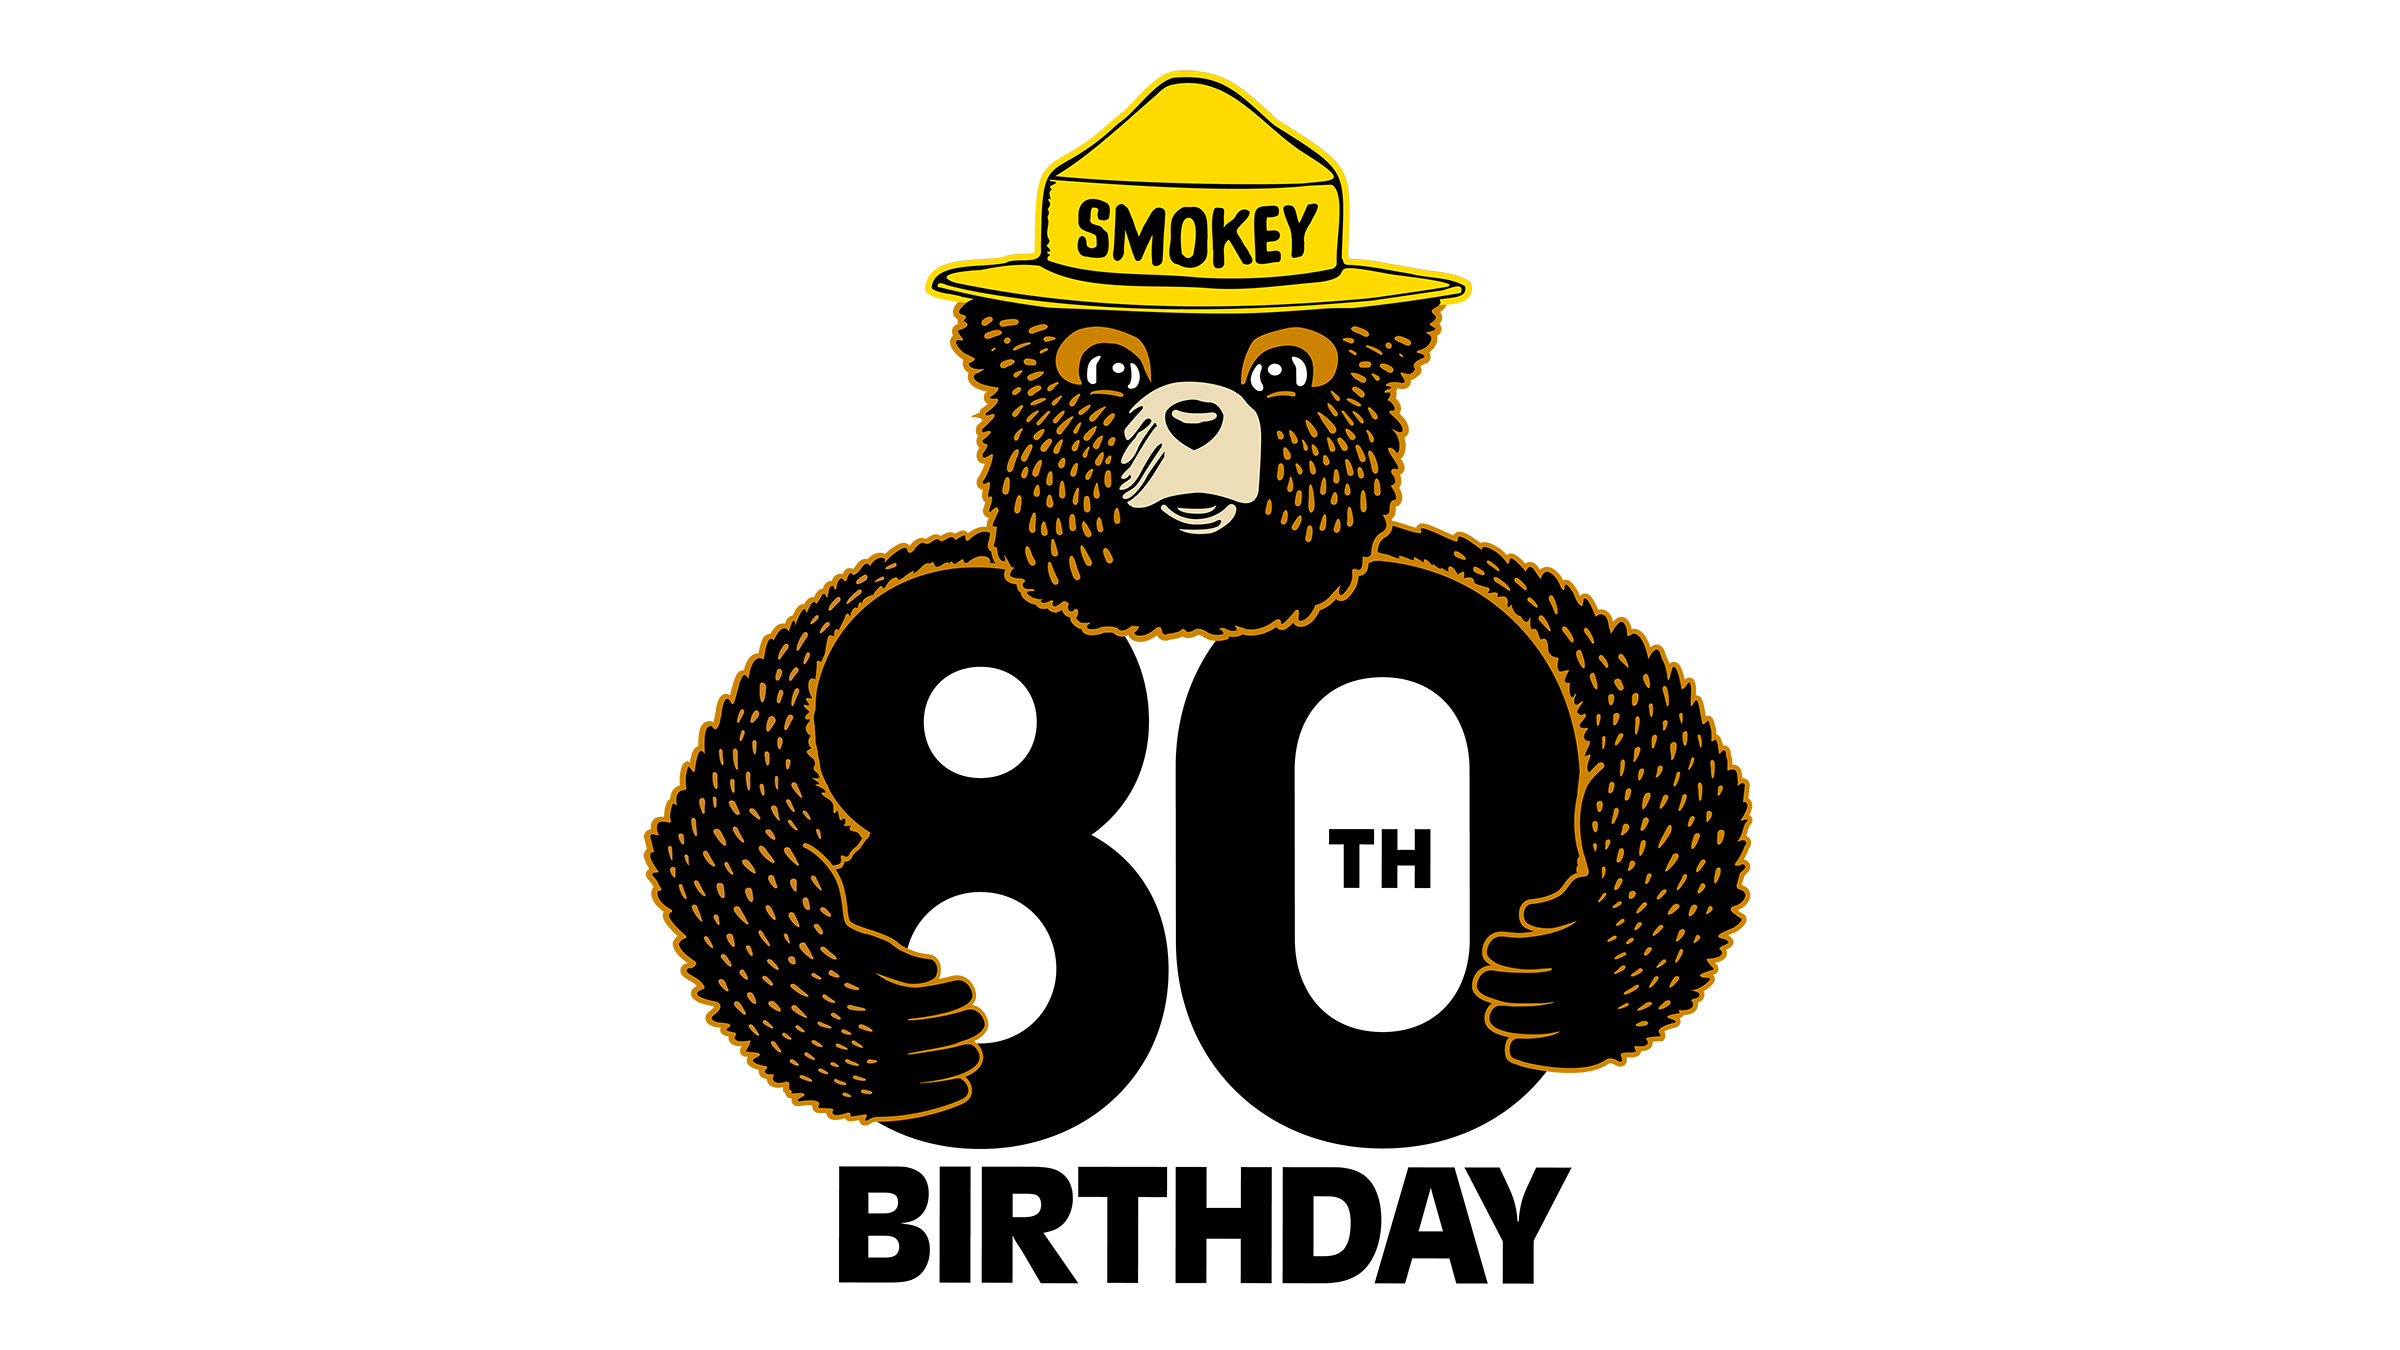 Smokey Bear 80th birthday logo